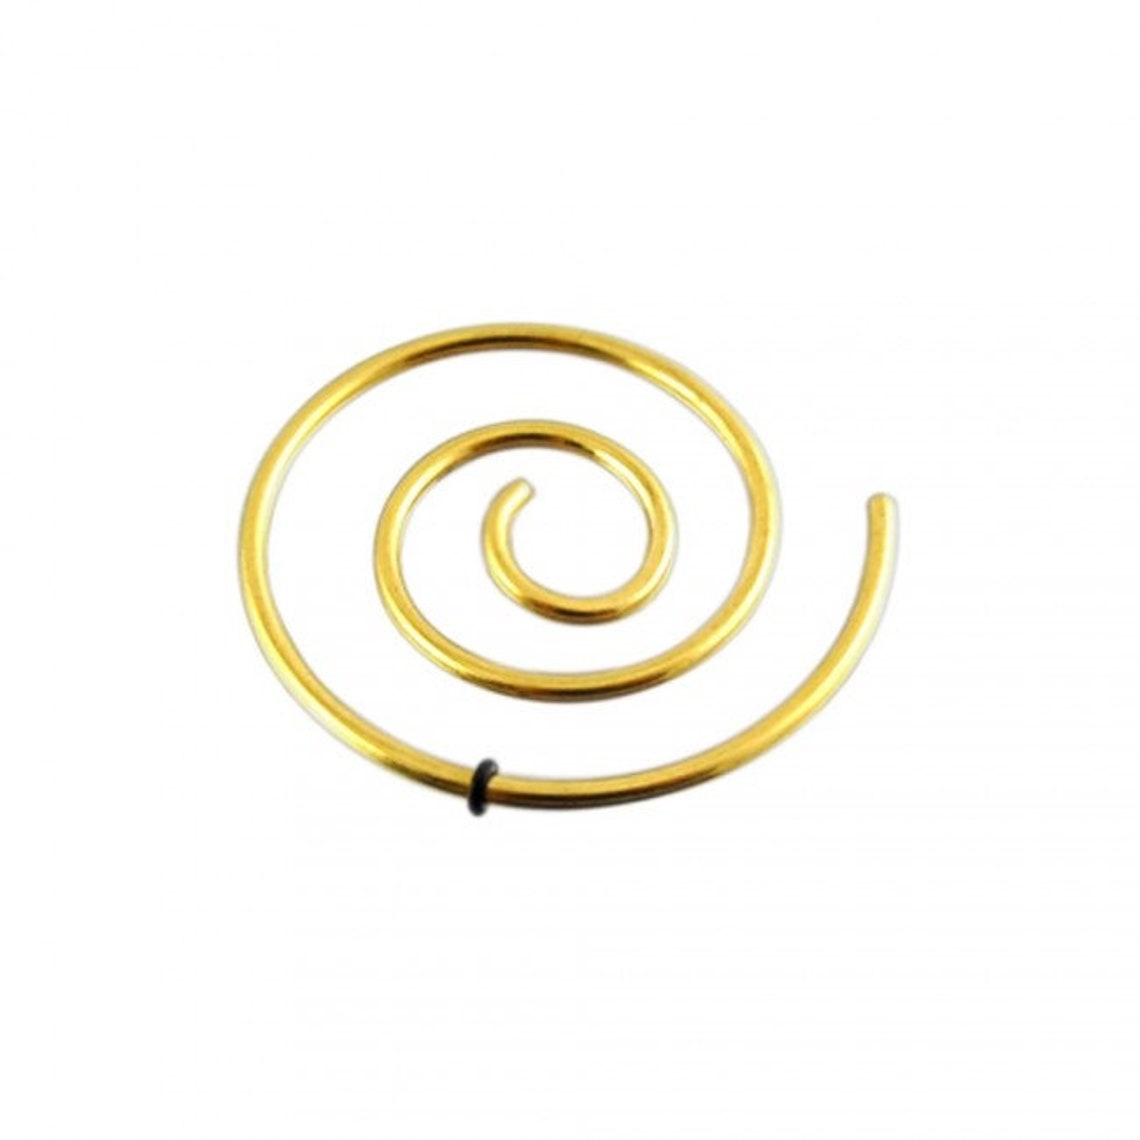 Spiral Earrings Spiral Gauges Ear Expander Surgical Steel | Etsy